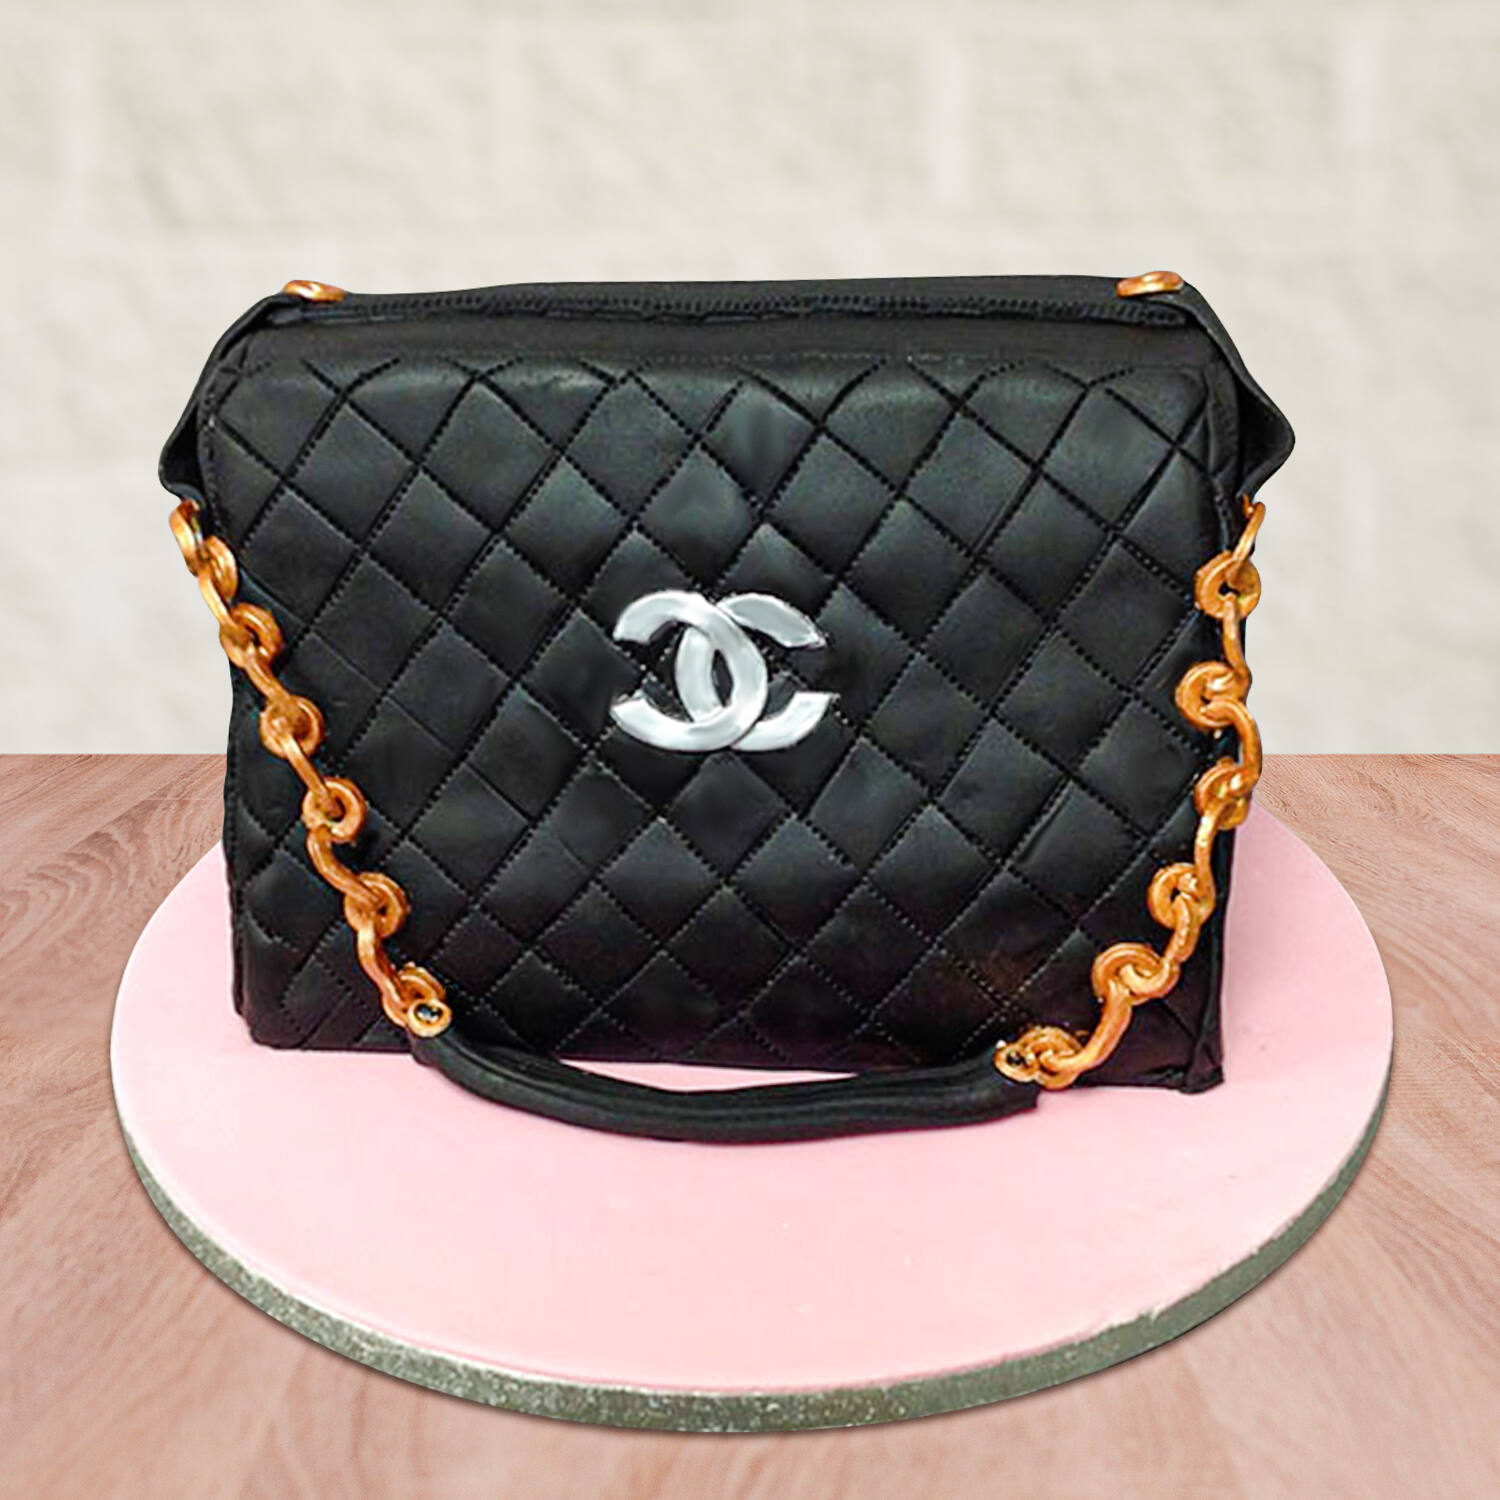 Handbag/purse cake | This is a 10